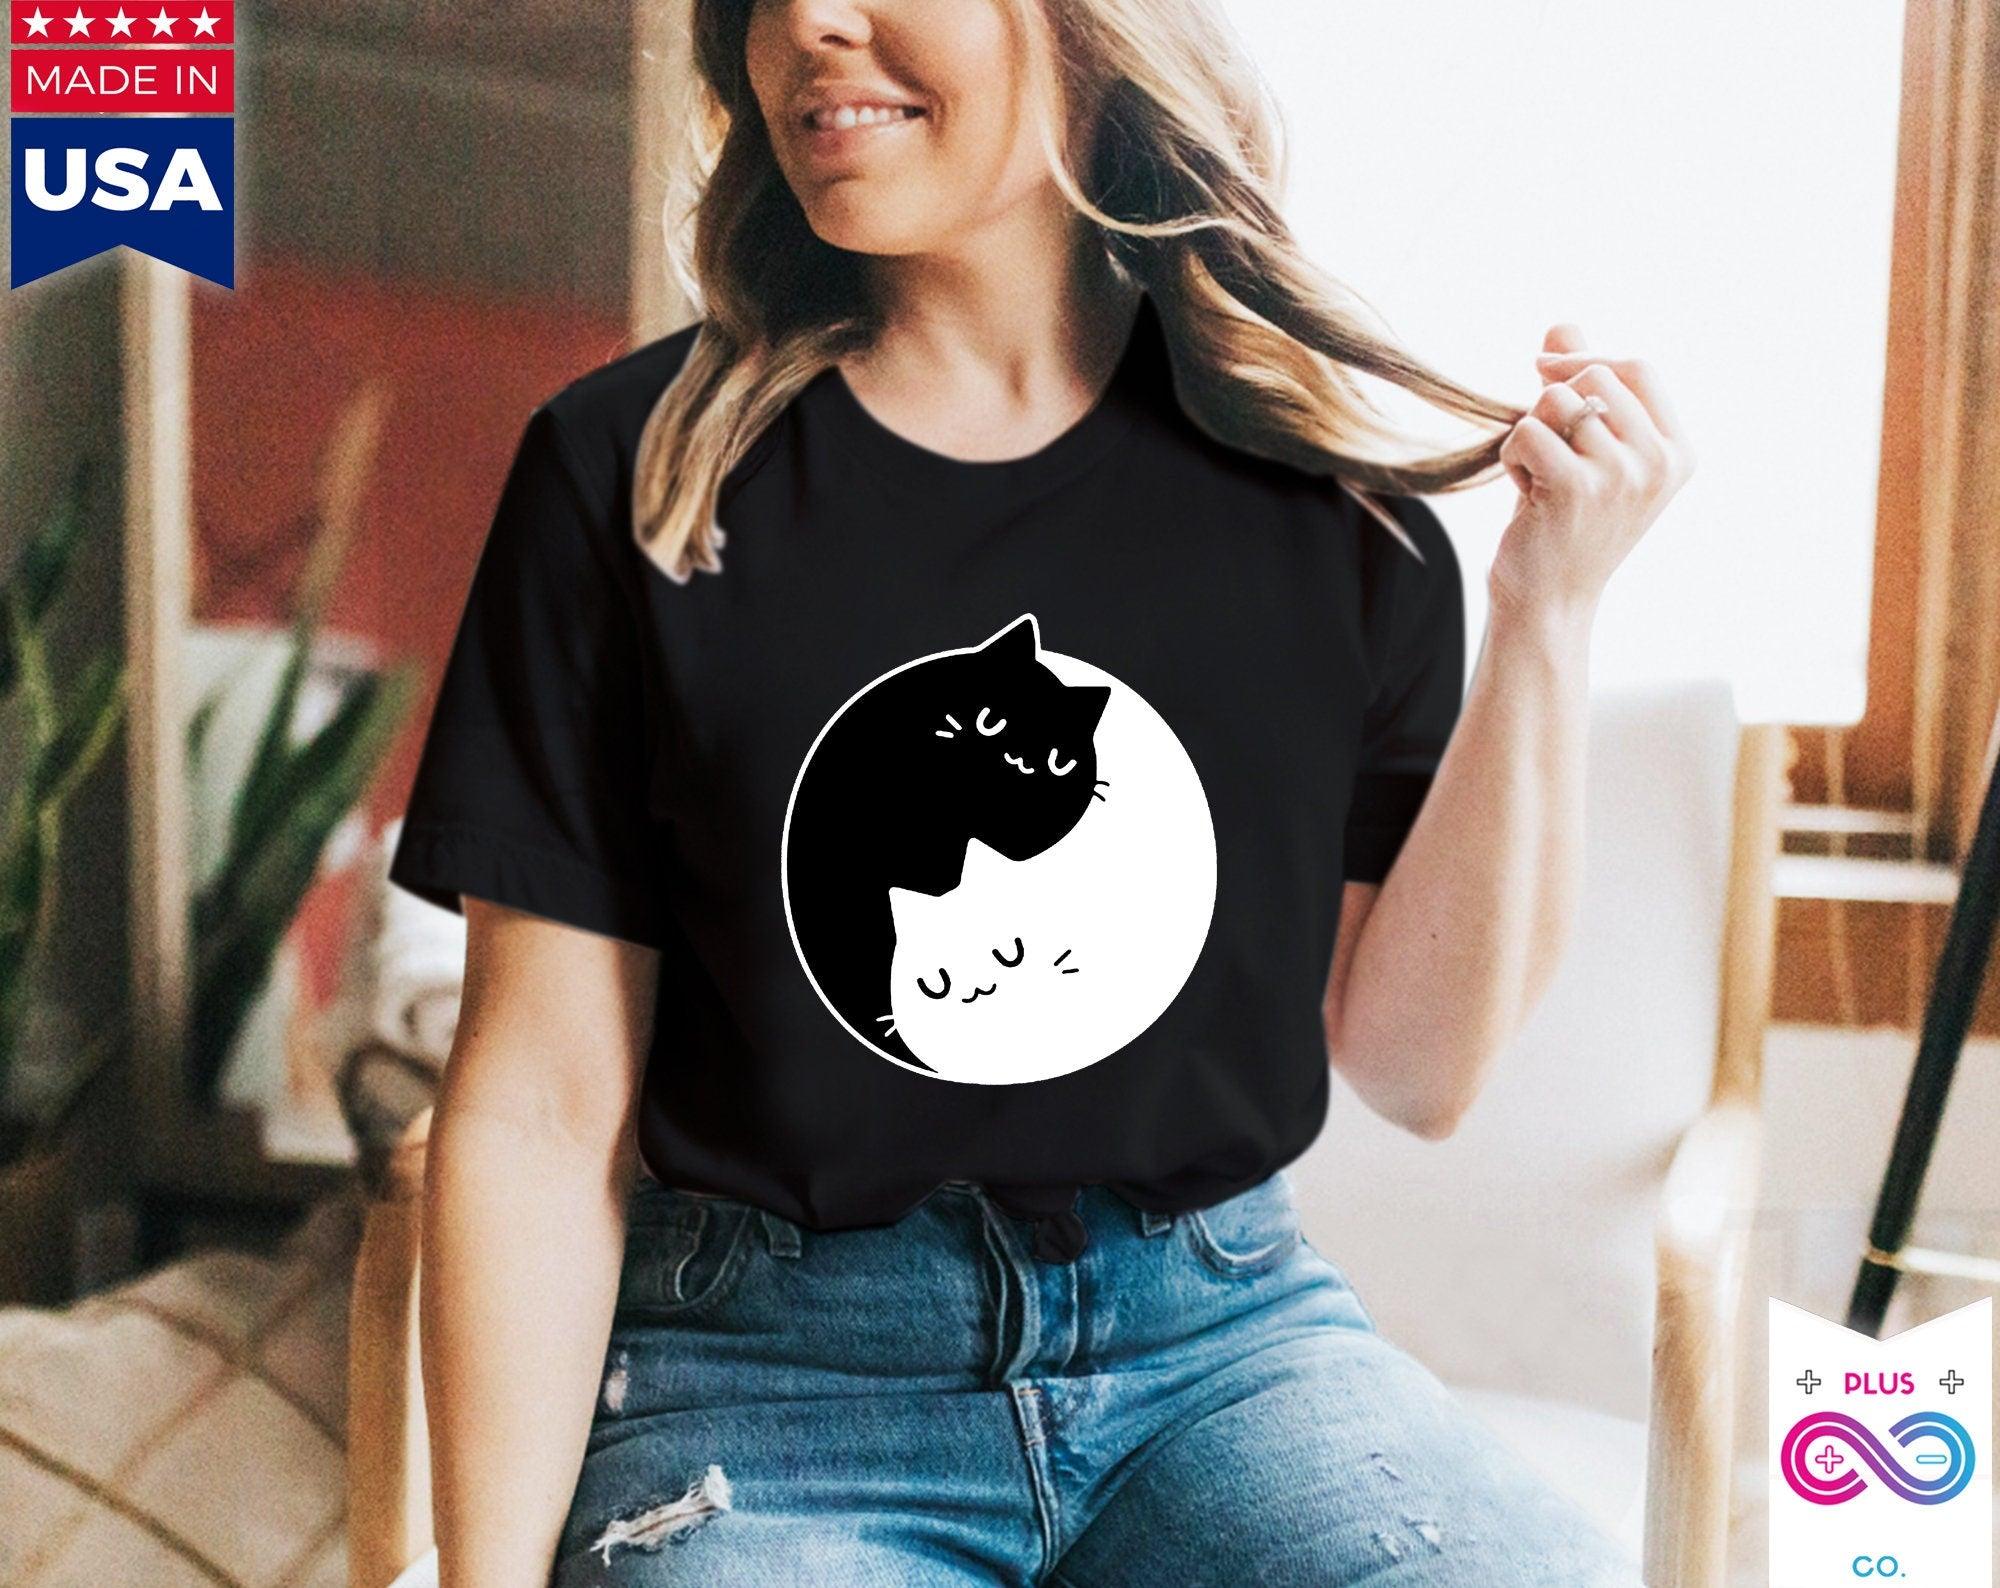 Yin Yang Cats T-shirts , Yin Yang Duality || Yin Yang kettir || Fullkomin gjöf - SML Xl - Dömur, karlar Unisex || Bff Par gjafahugmyndir, Cat Mom Tee, tees - plusminusco.com